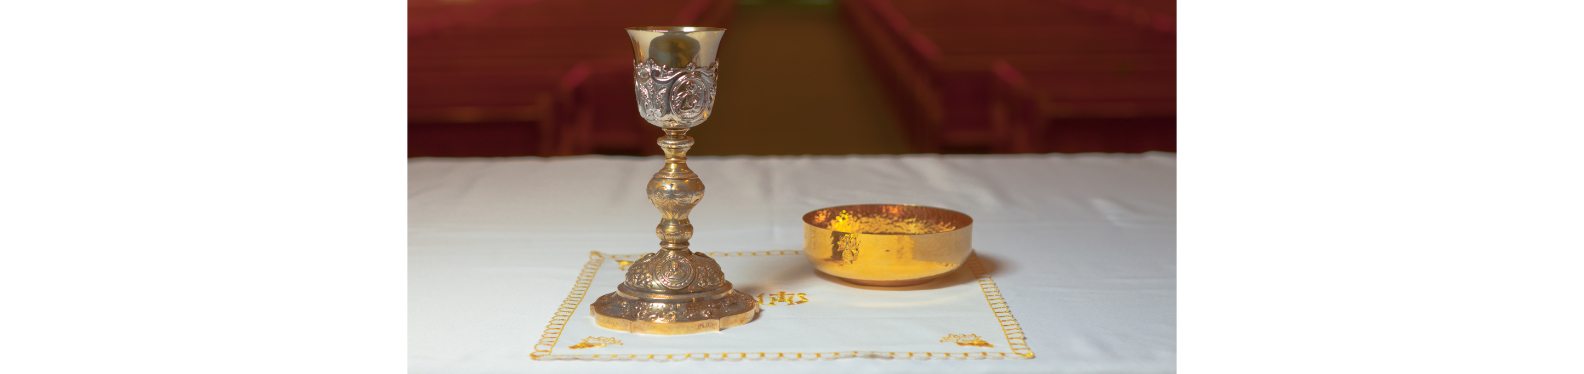 Chalice and Ciborium bowl on Altar